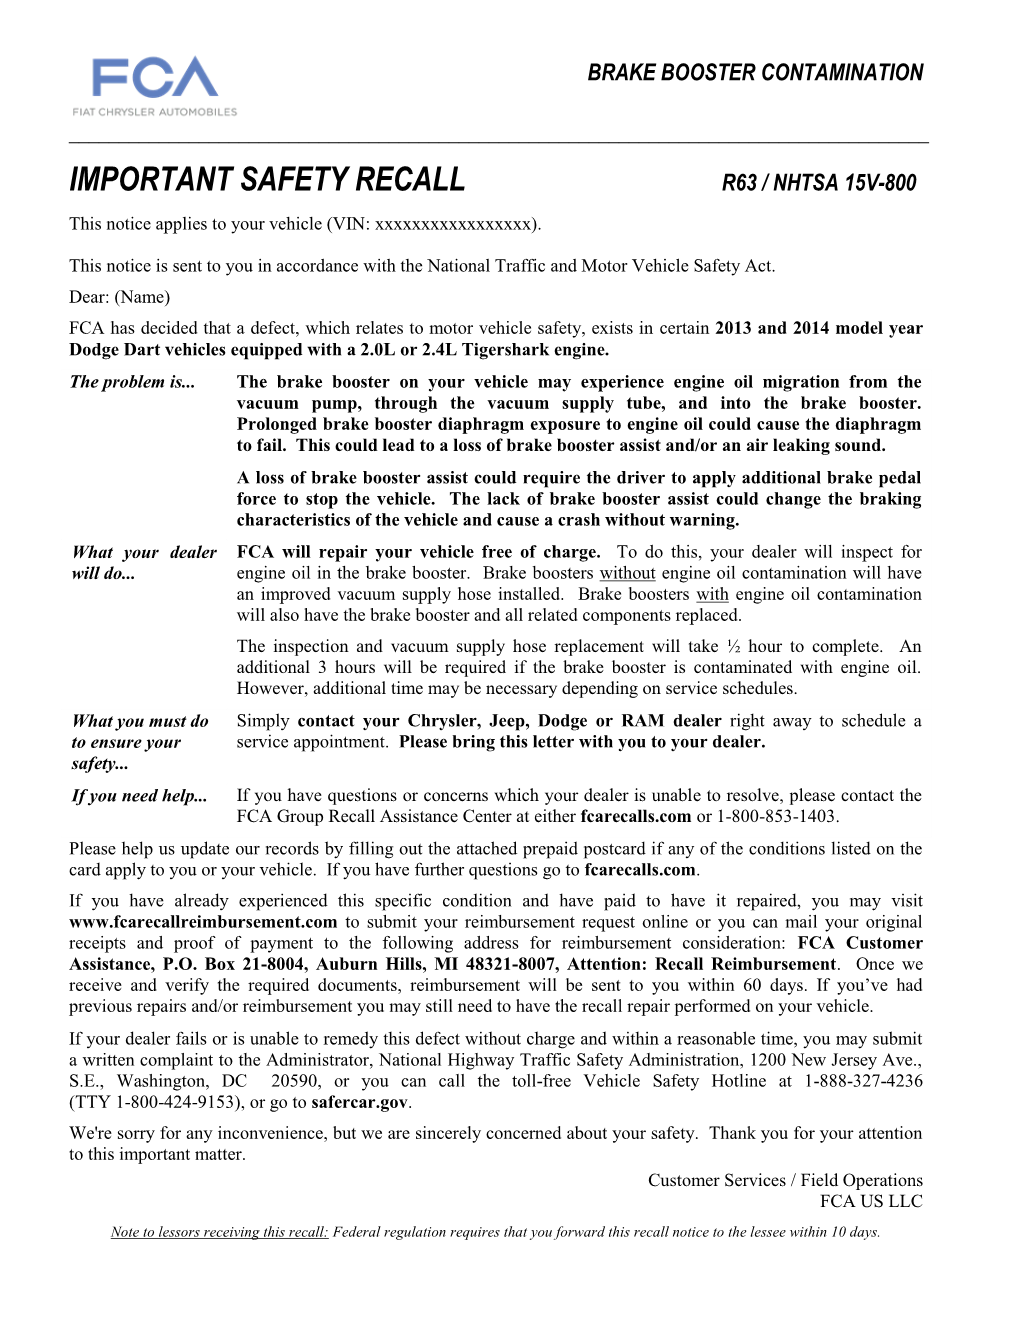 Important Safety Recall R63 / Nhtsa 15V-800